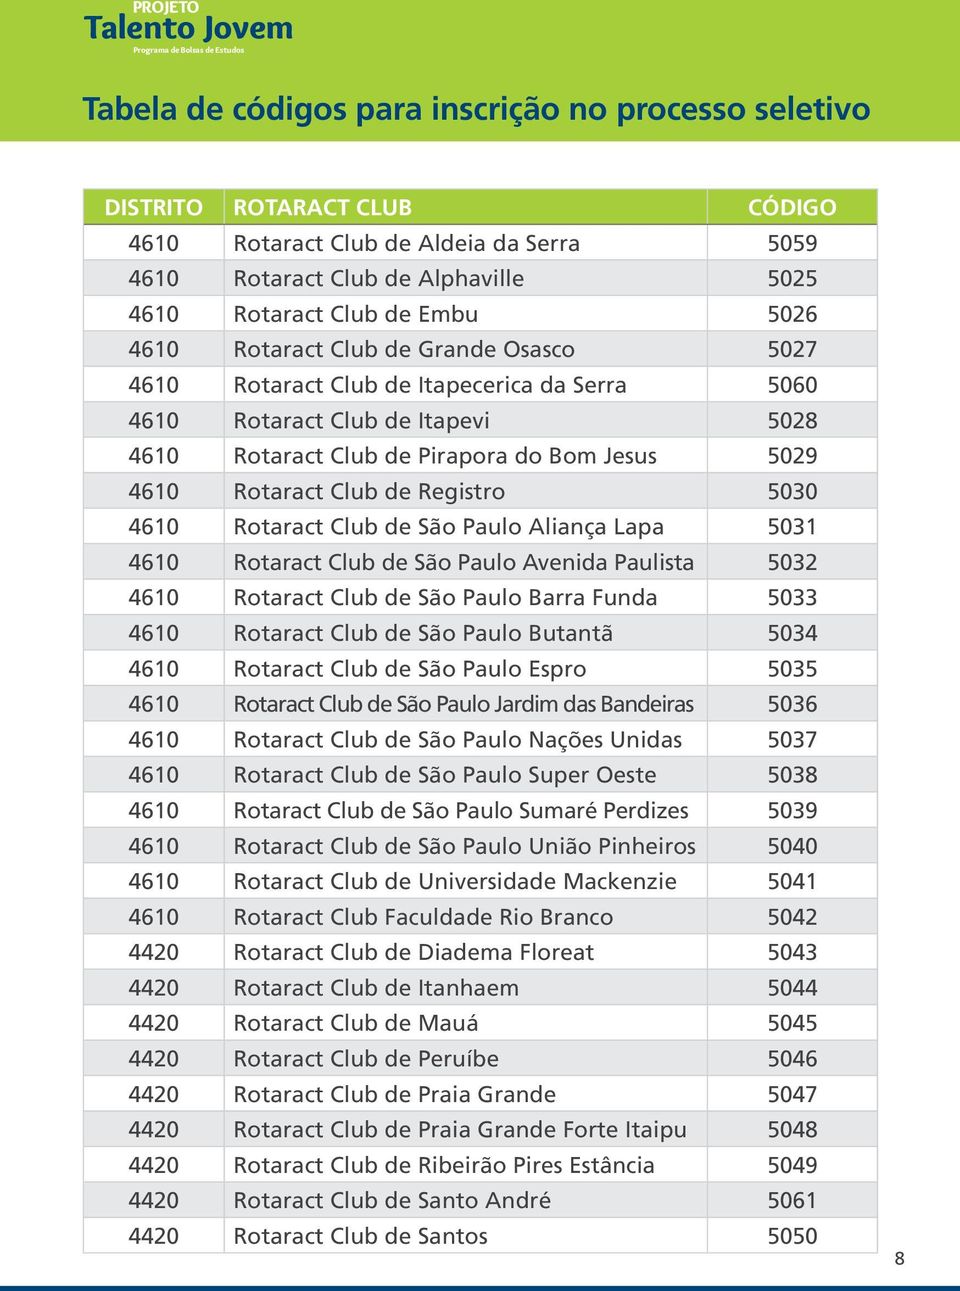 5031 4610 Rotaract Club de São Paulo Avenida Paulista 5032 4610 Rotaract Club de São Paulo Barra Funda 5033 4610 Rotaract Club de São Paulo Butantã 5034 4610 Rotaract Club de São Paulo Espro 5035